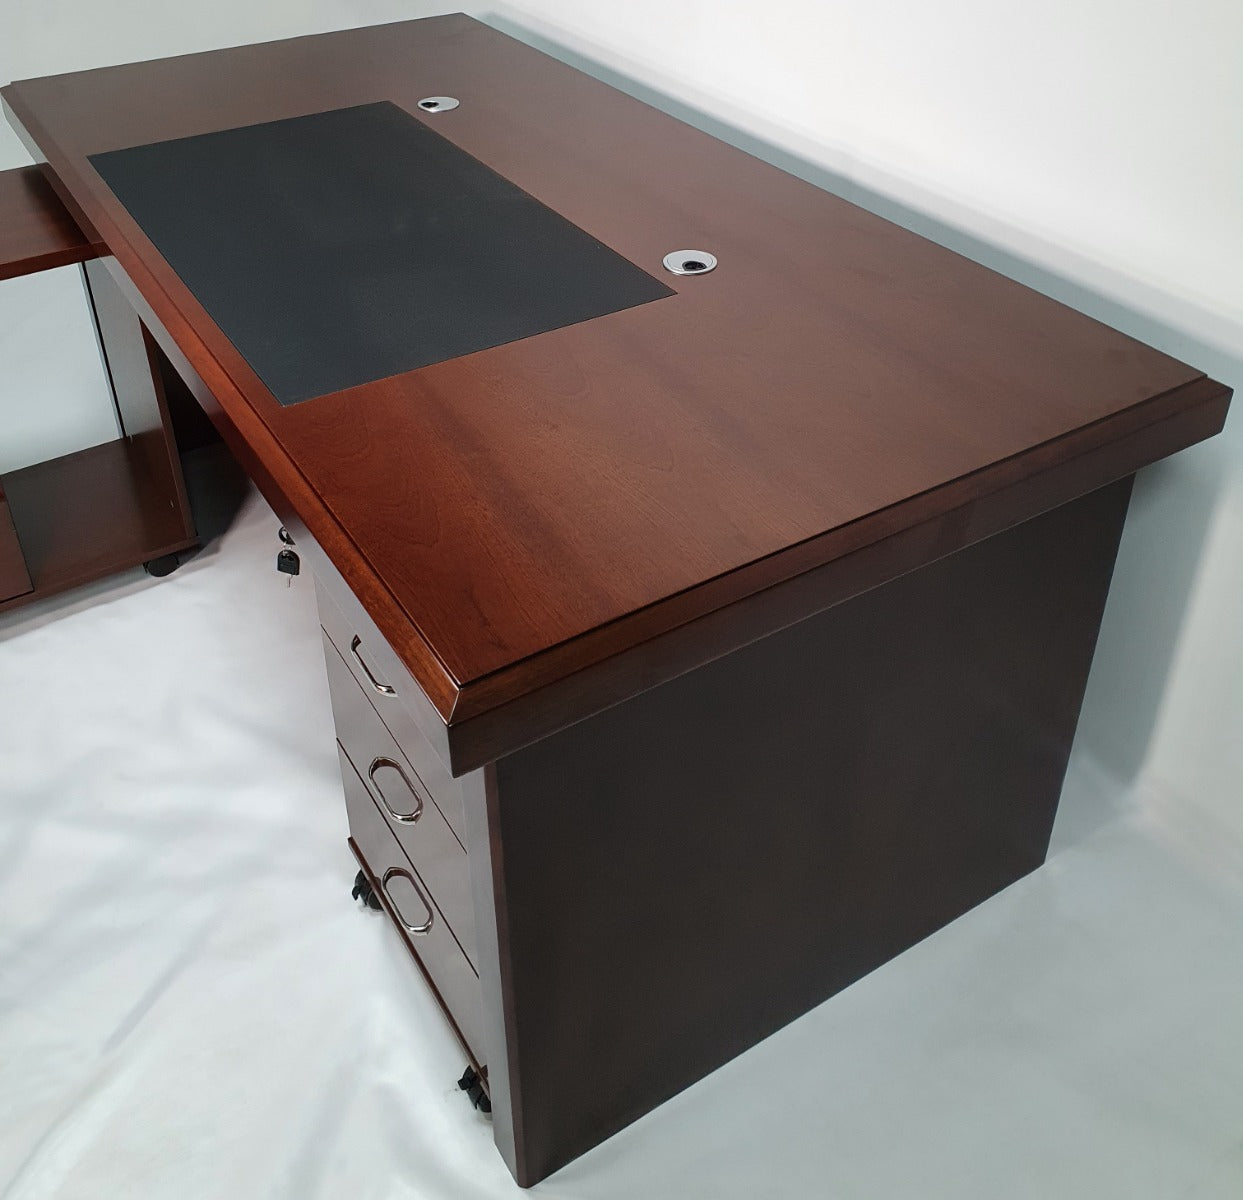 Walnut Real Wood Veneer Executive Desk with Pedestal and Return - BSE181